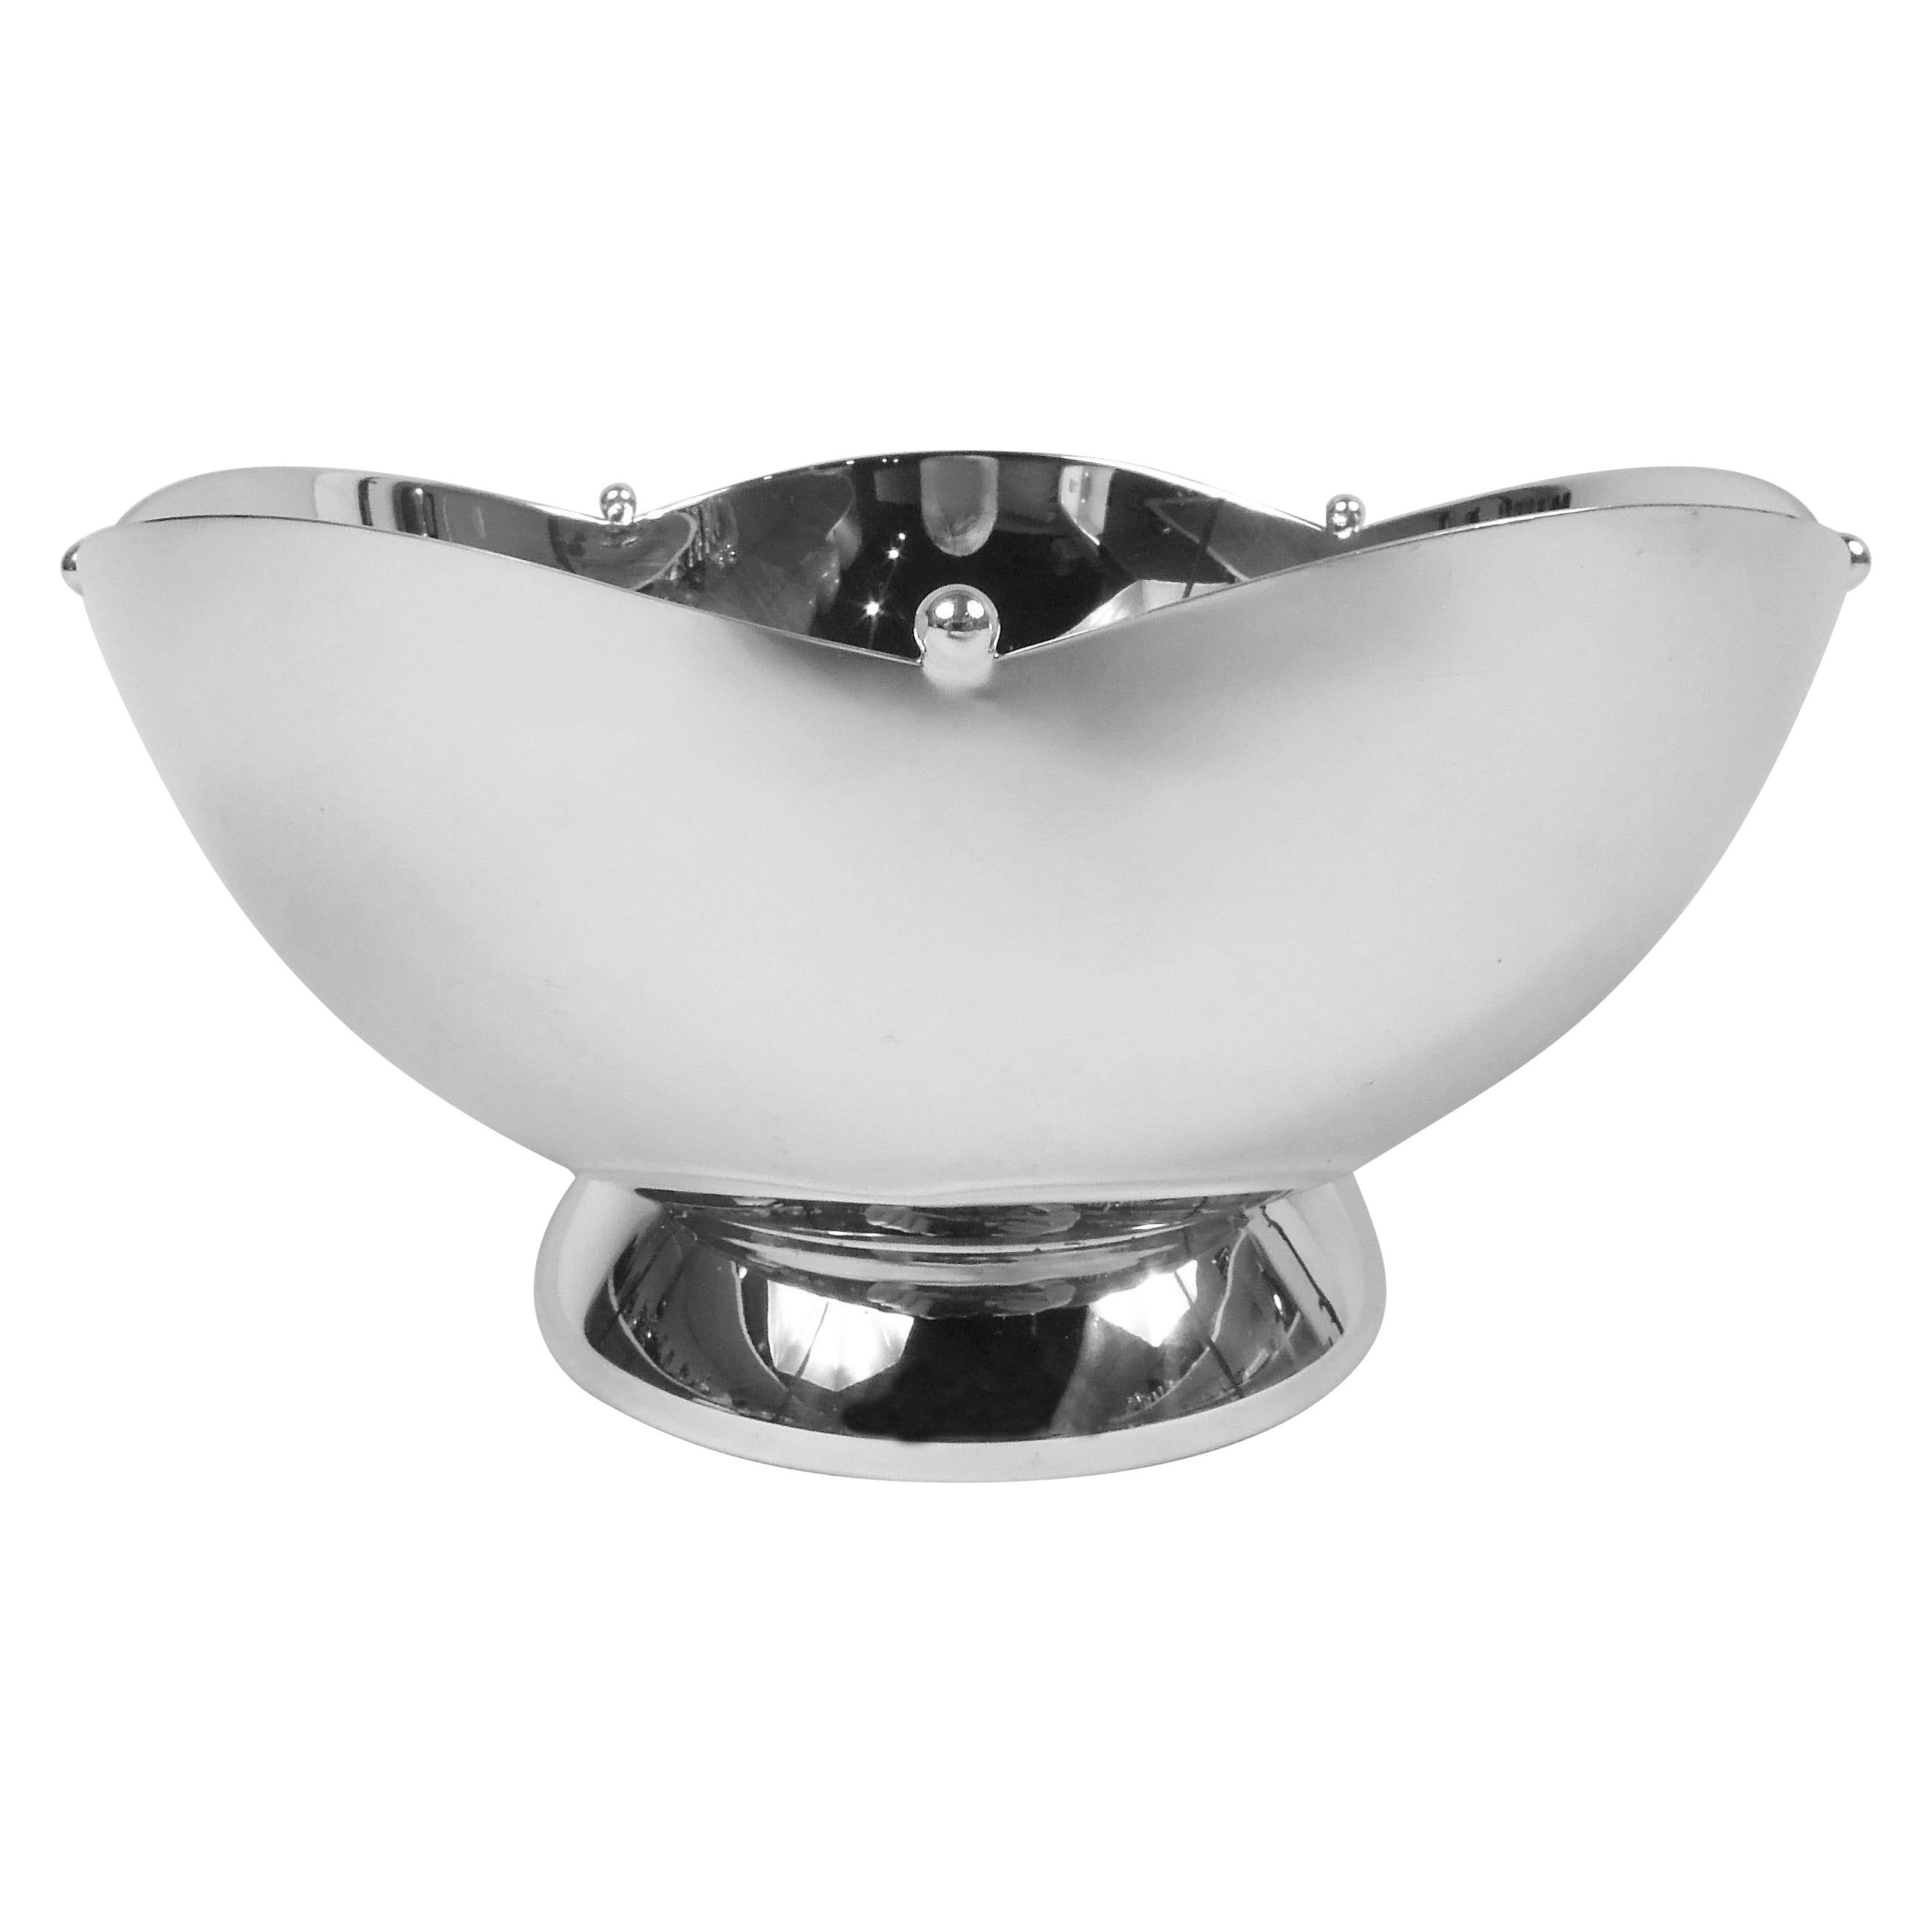 Cartier American Art Deco Sterling Silver Bowl